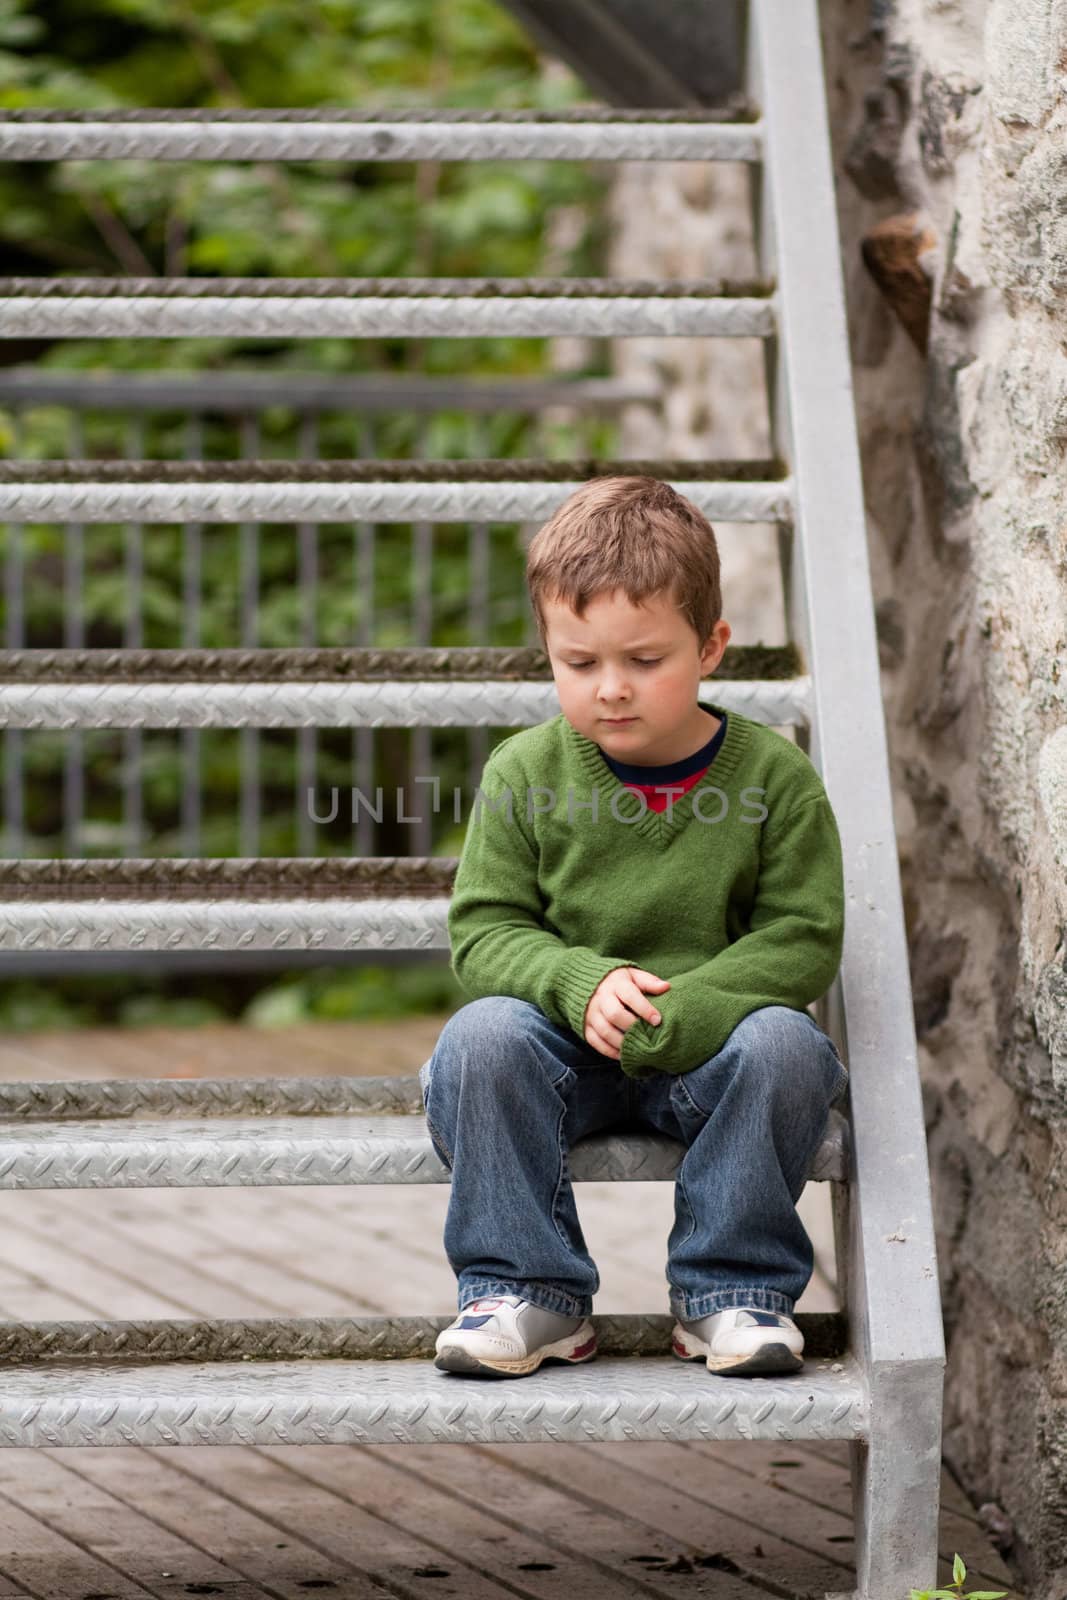 Sad little boy sitting alone on stairs